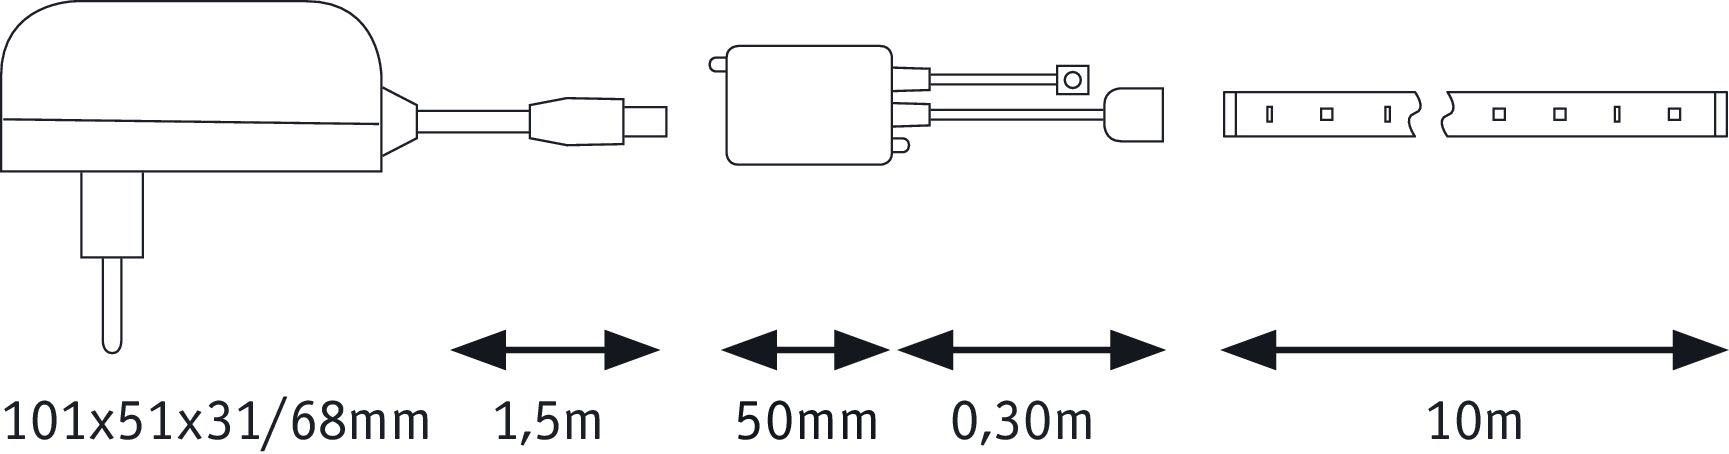 Paulmann 28W, Set dimmbar mit SimpLED Memoryfunktion Stripe 1-flammig, Fernbedienung, bunt 10m LED beschichtet RGB